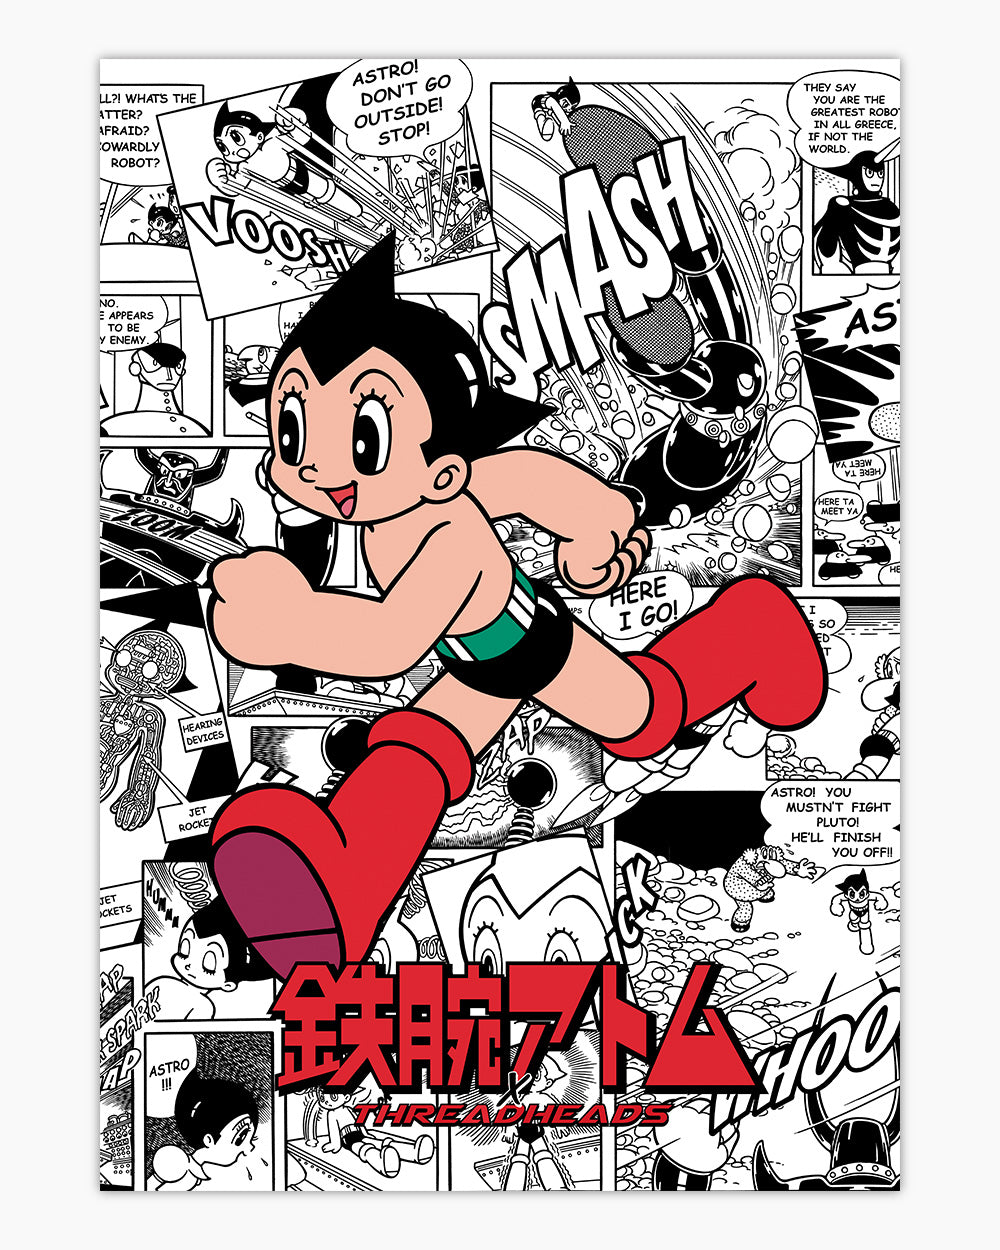 Manga Story Astro Boy Art Print